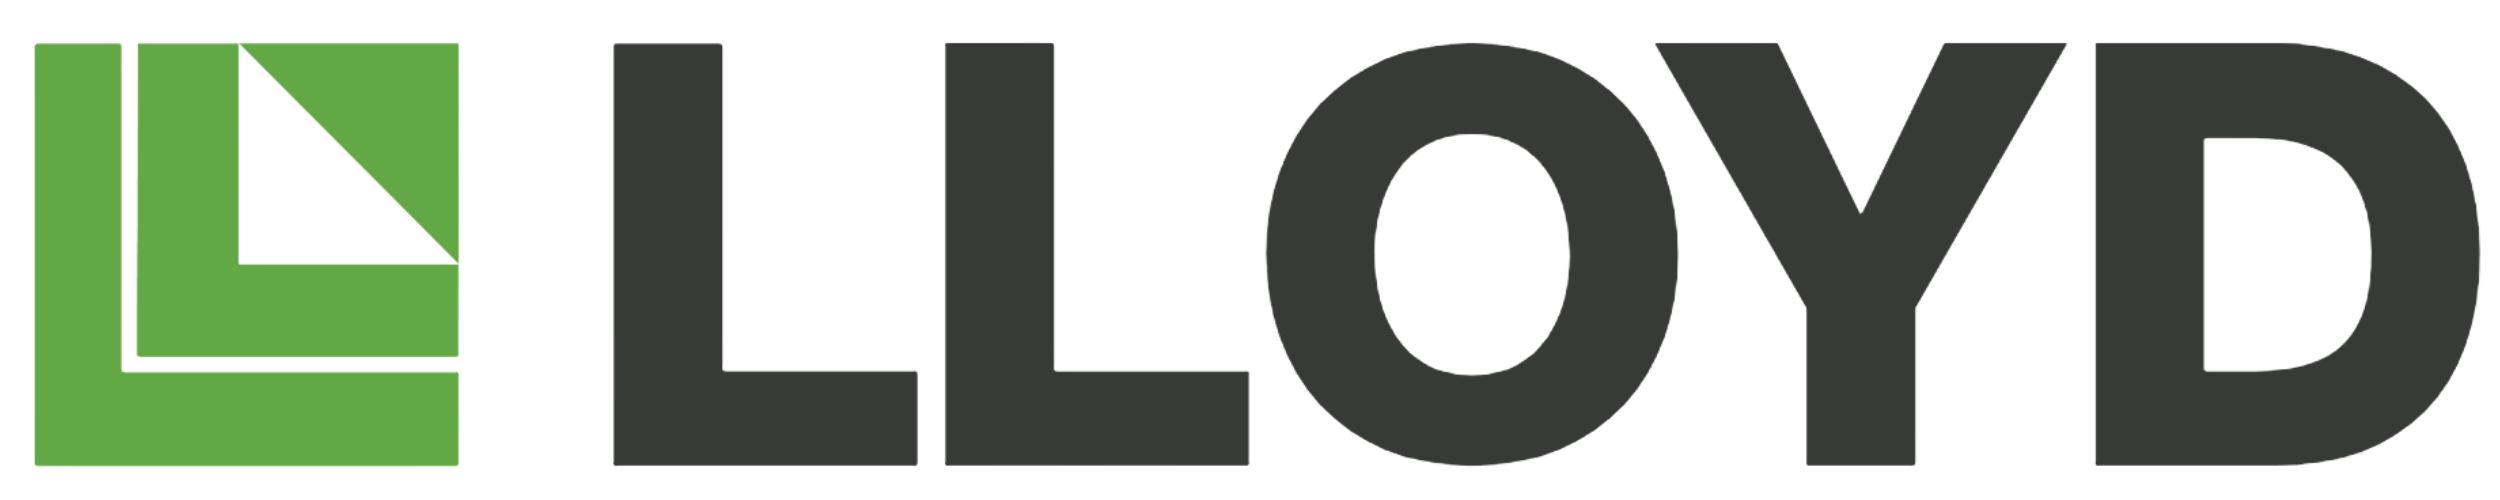 Lloyd Companies logo (transparent)